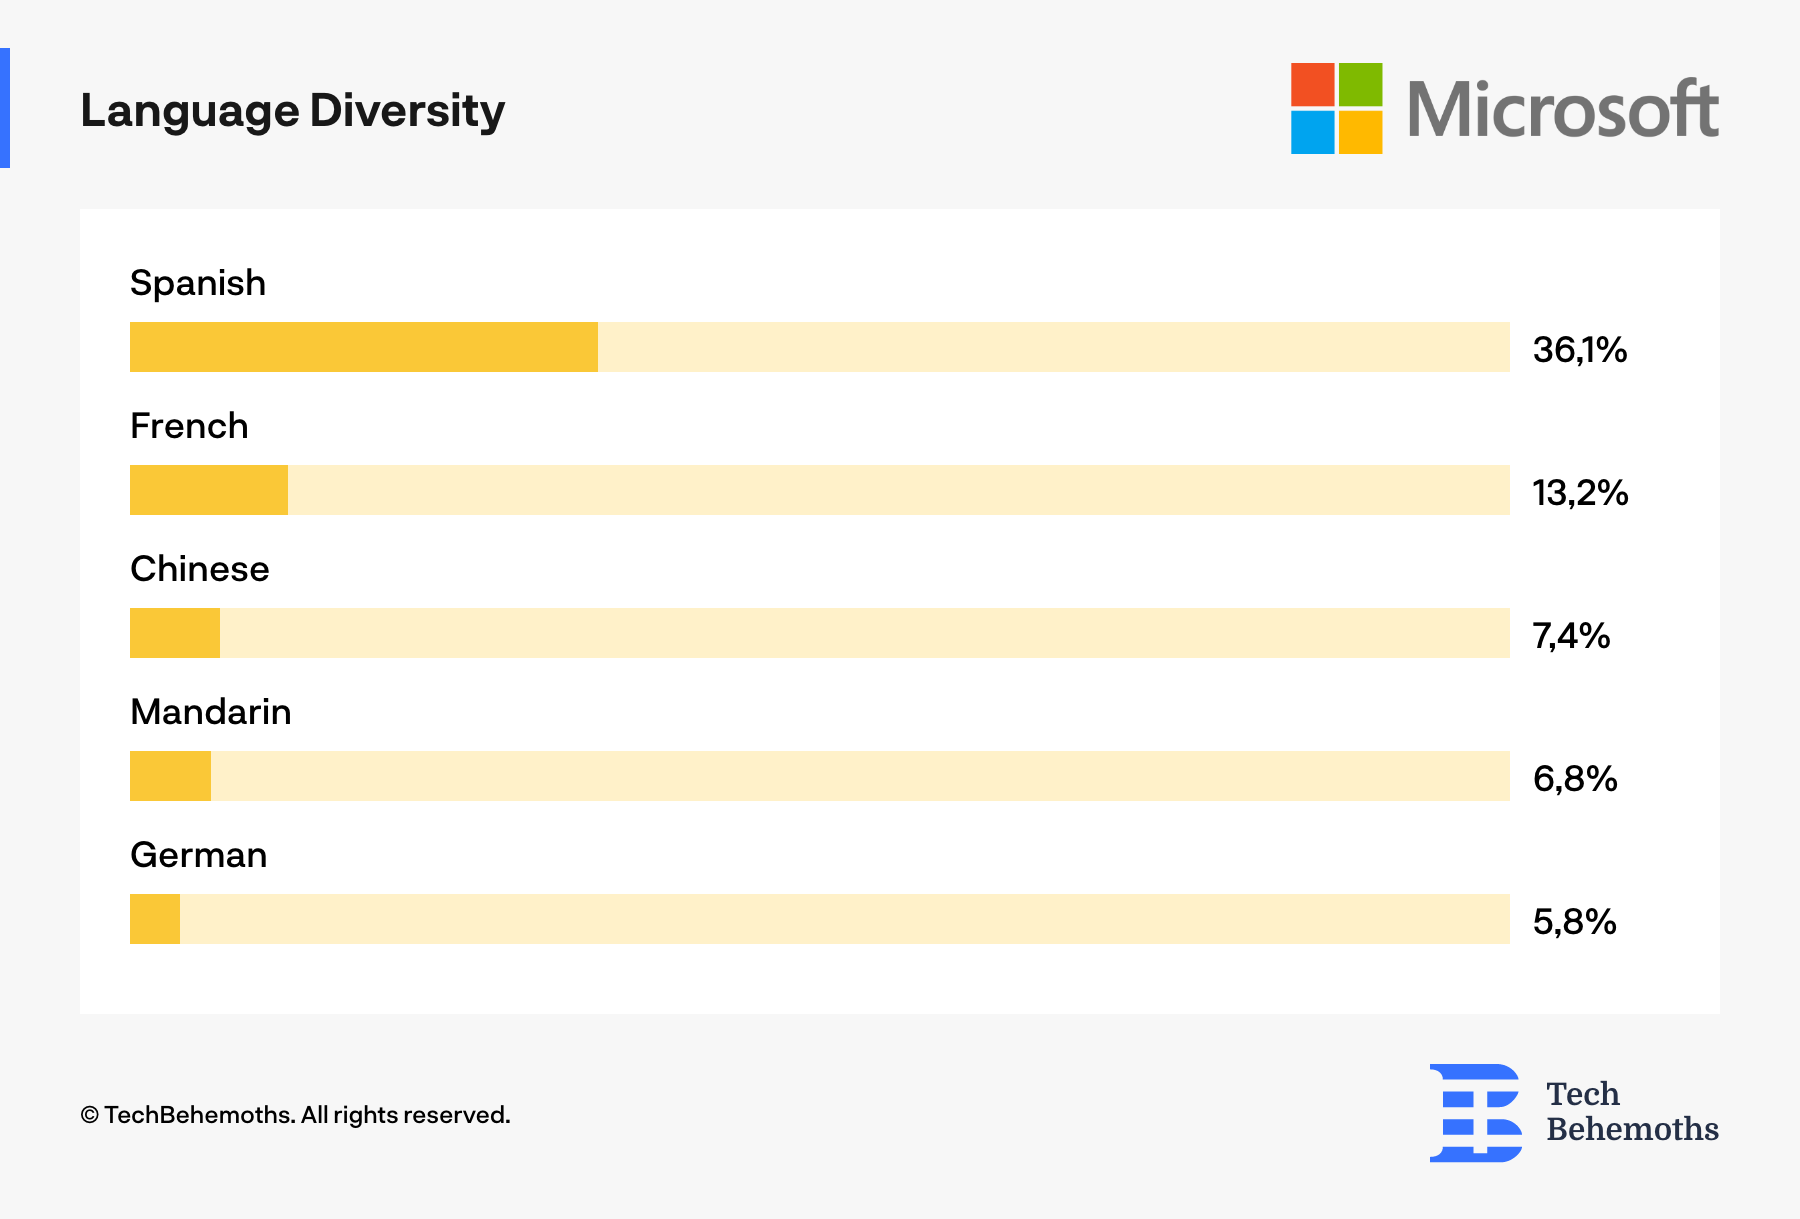 Language Diversity at Microsoft